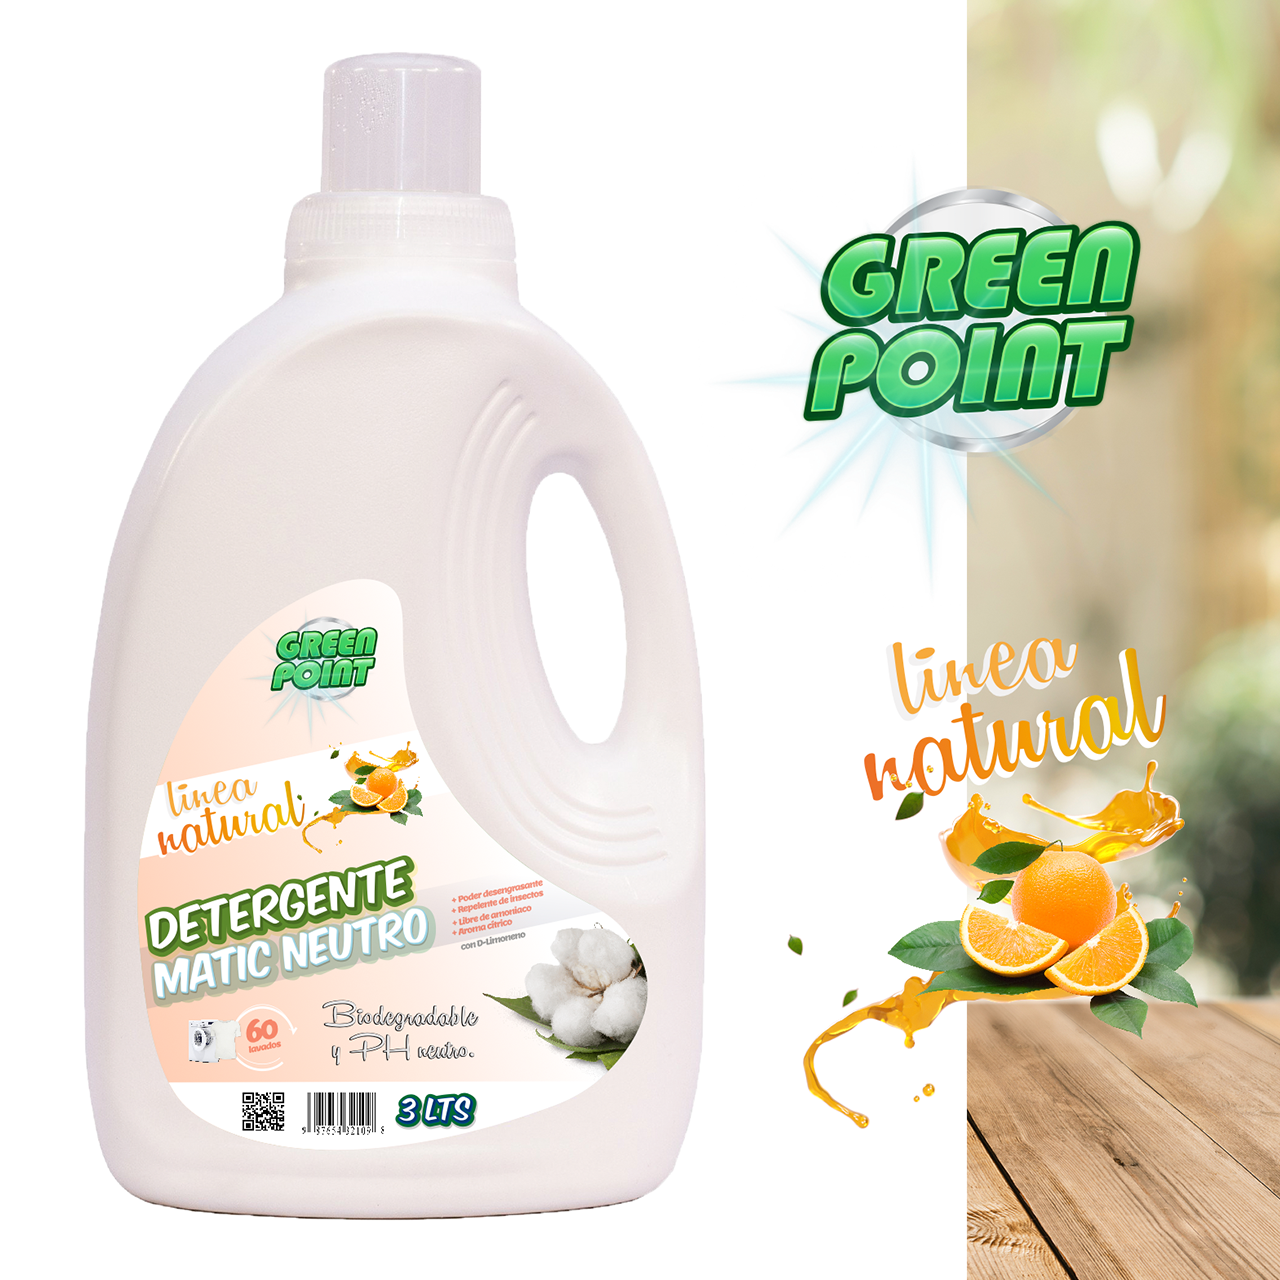 Detergente Matic Neutro Natural Green Point 3 litros